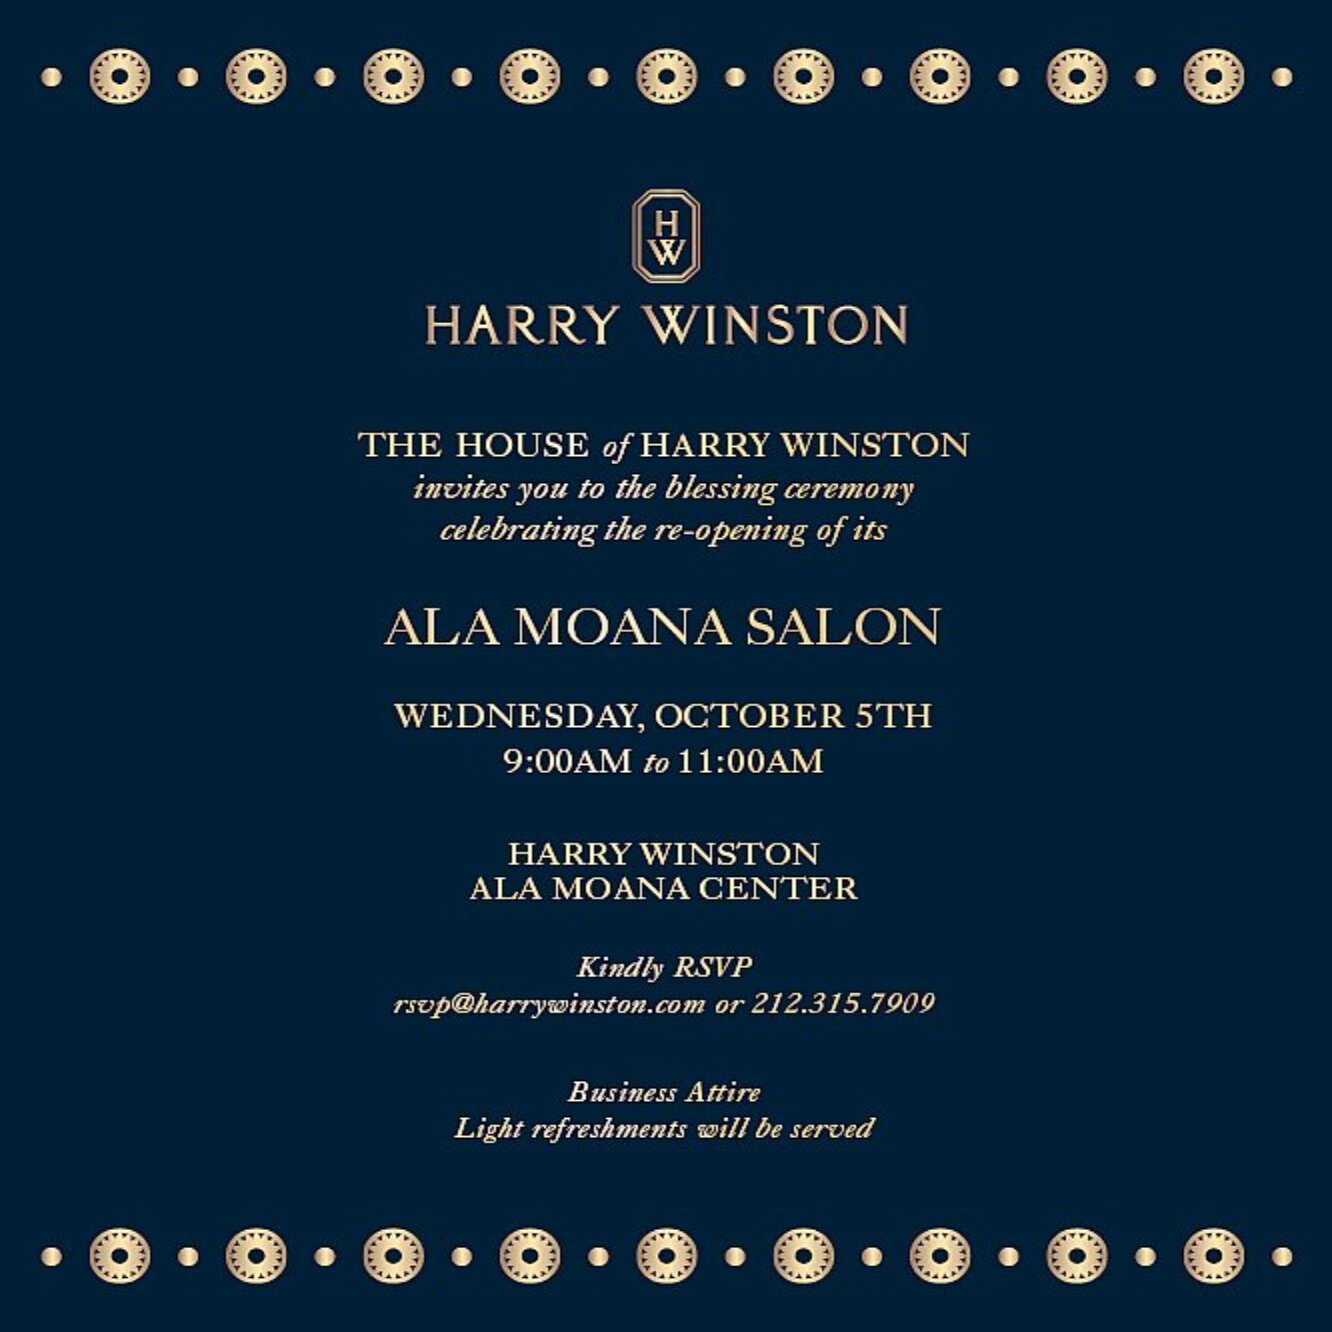 Harry Winston Invitation.jpg